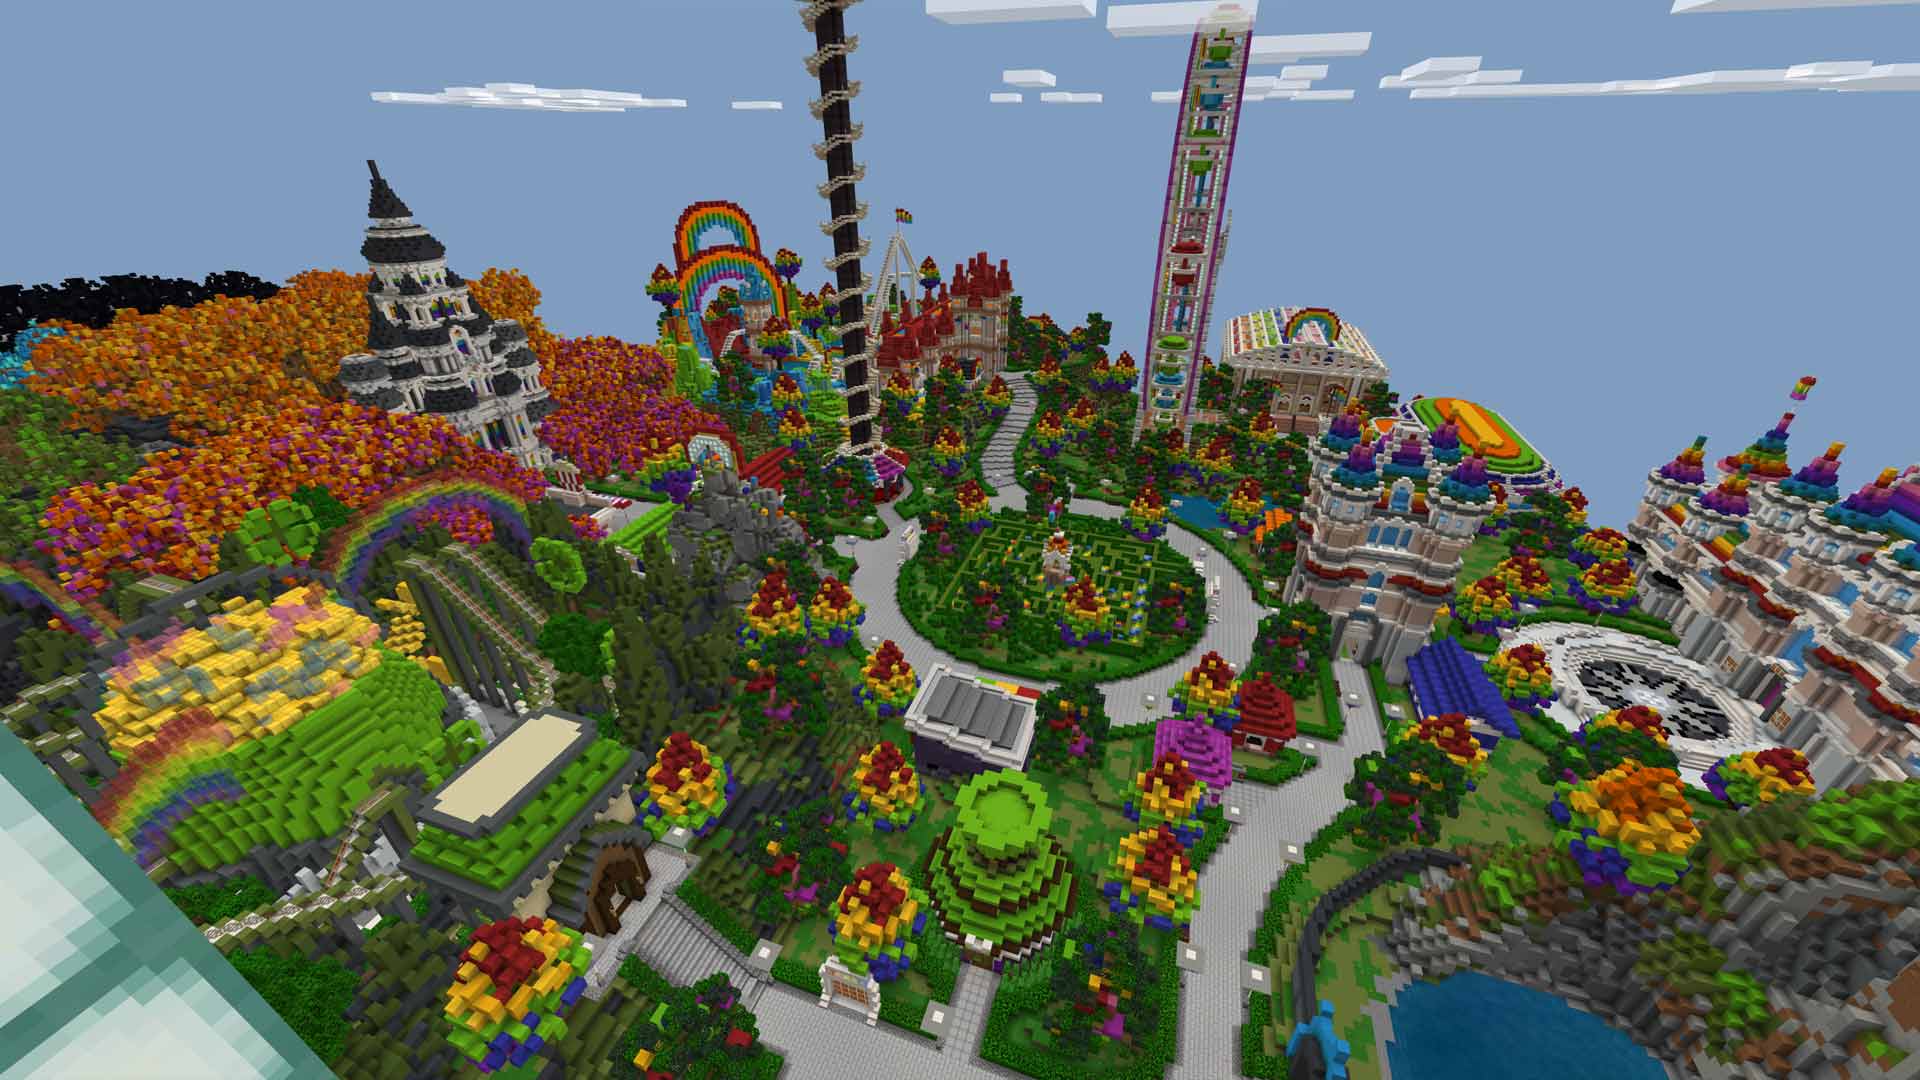 Minecraft Rainbow Park Review